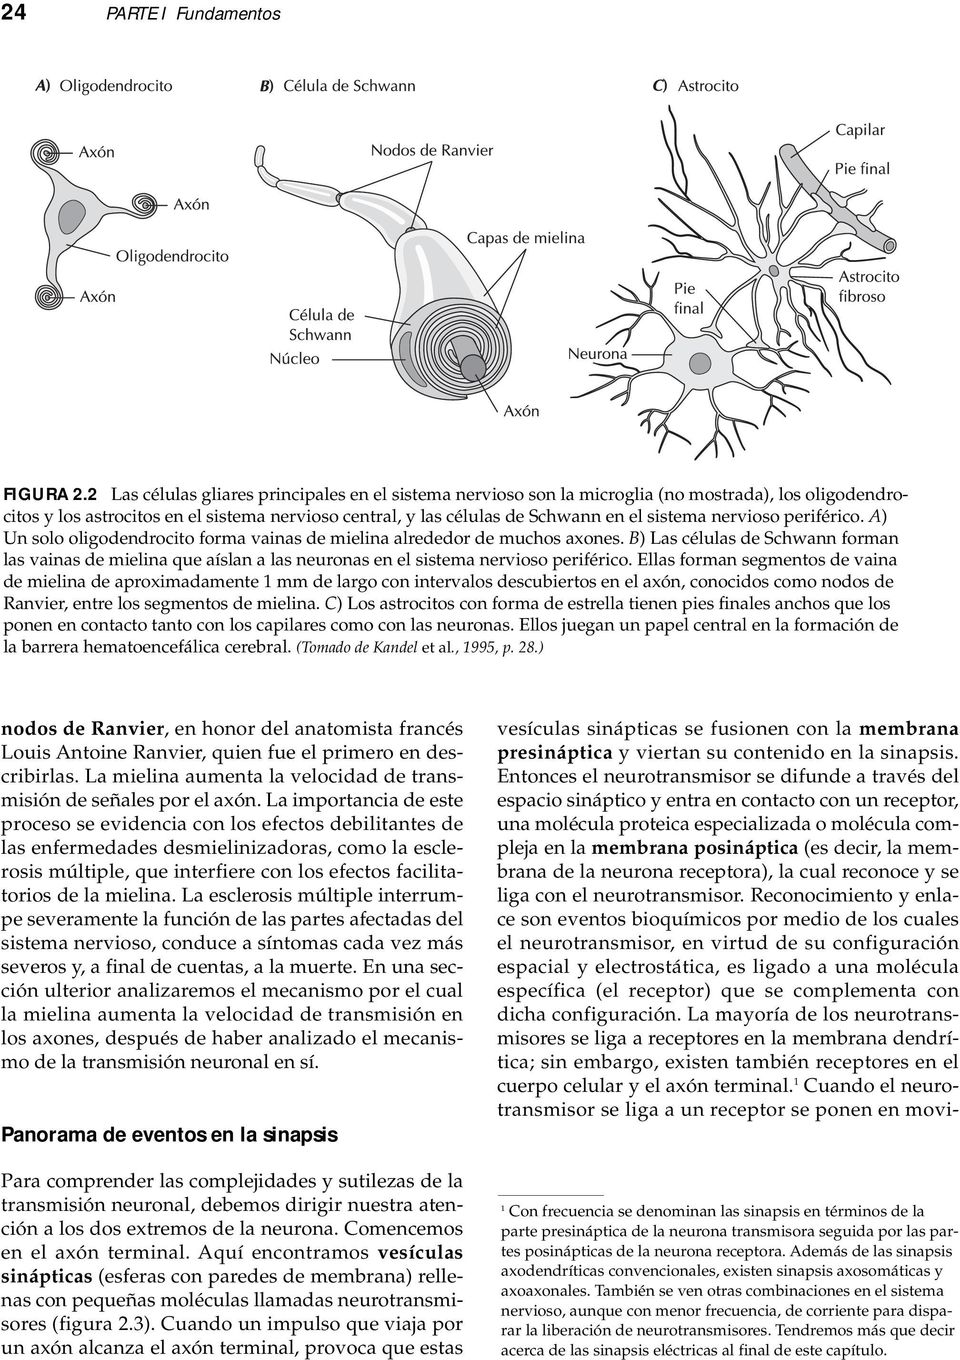 nervioso periférico. A) Un solo oligodendrocito forma vainas de mielina alrededor de muchos axones.